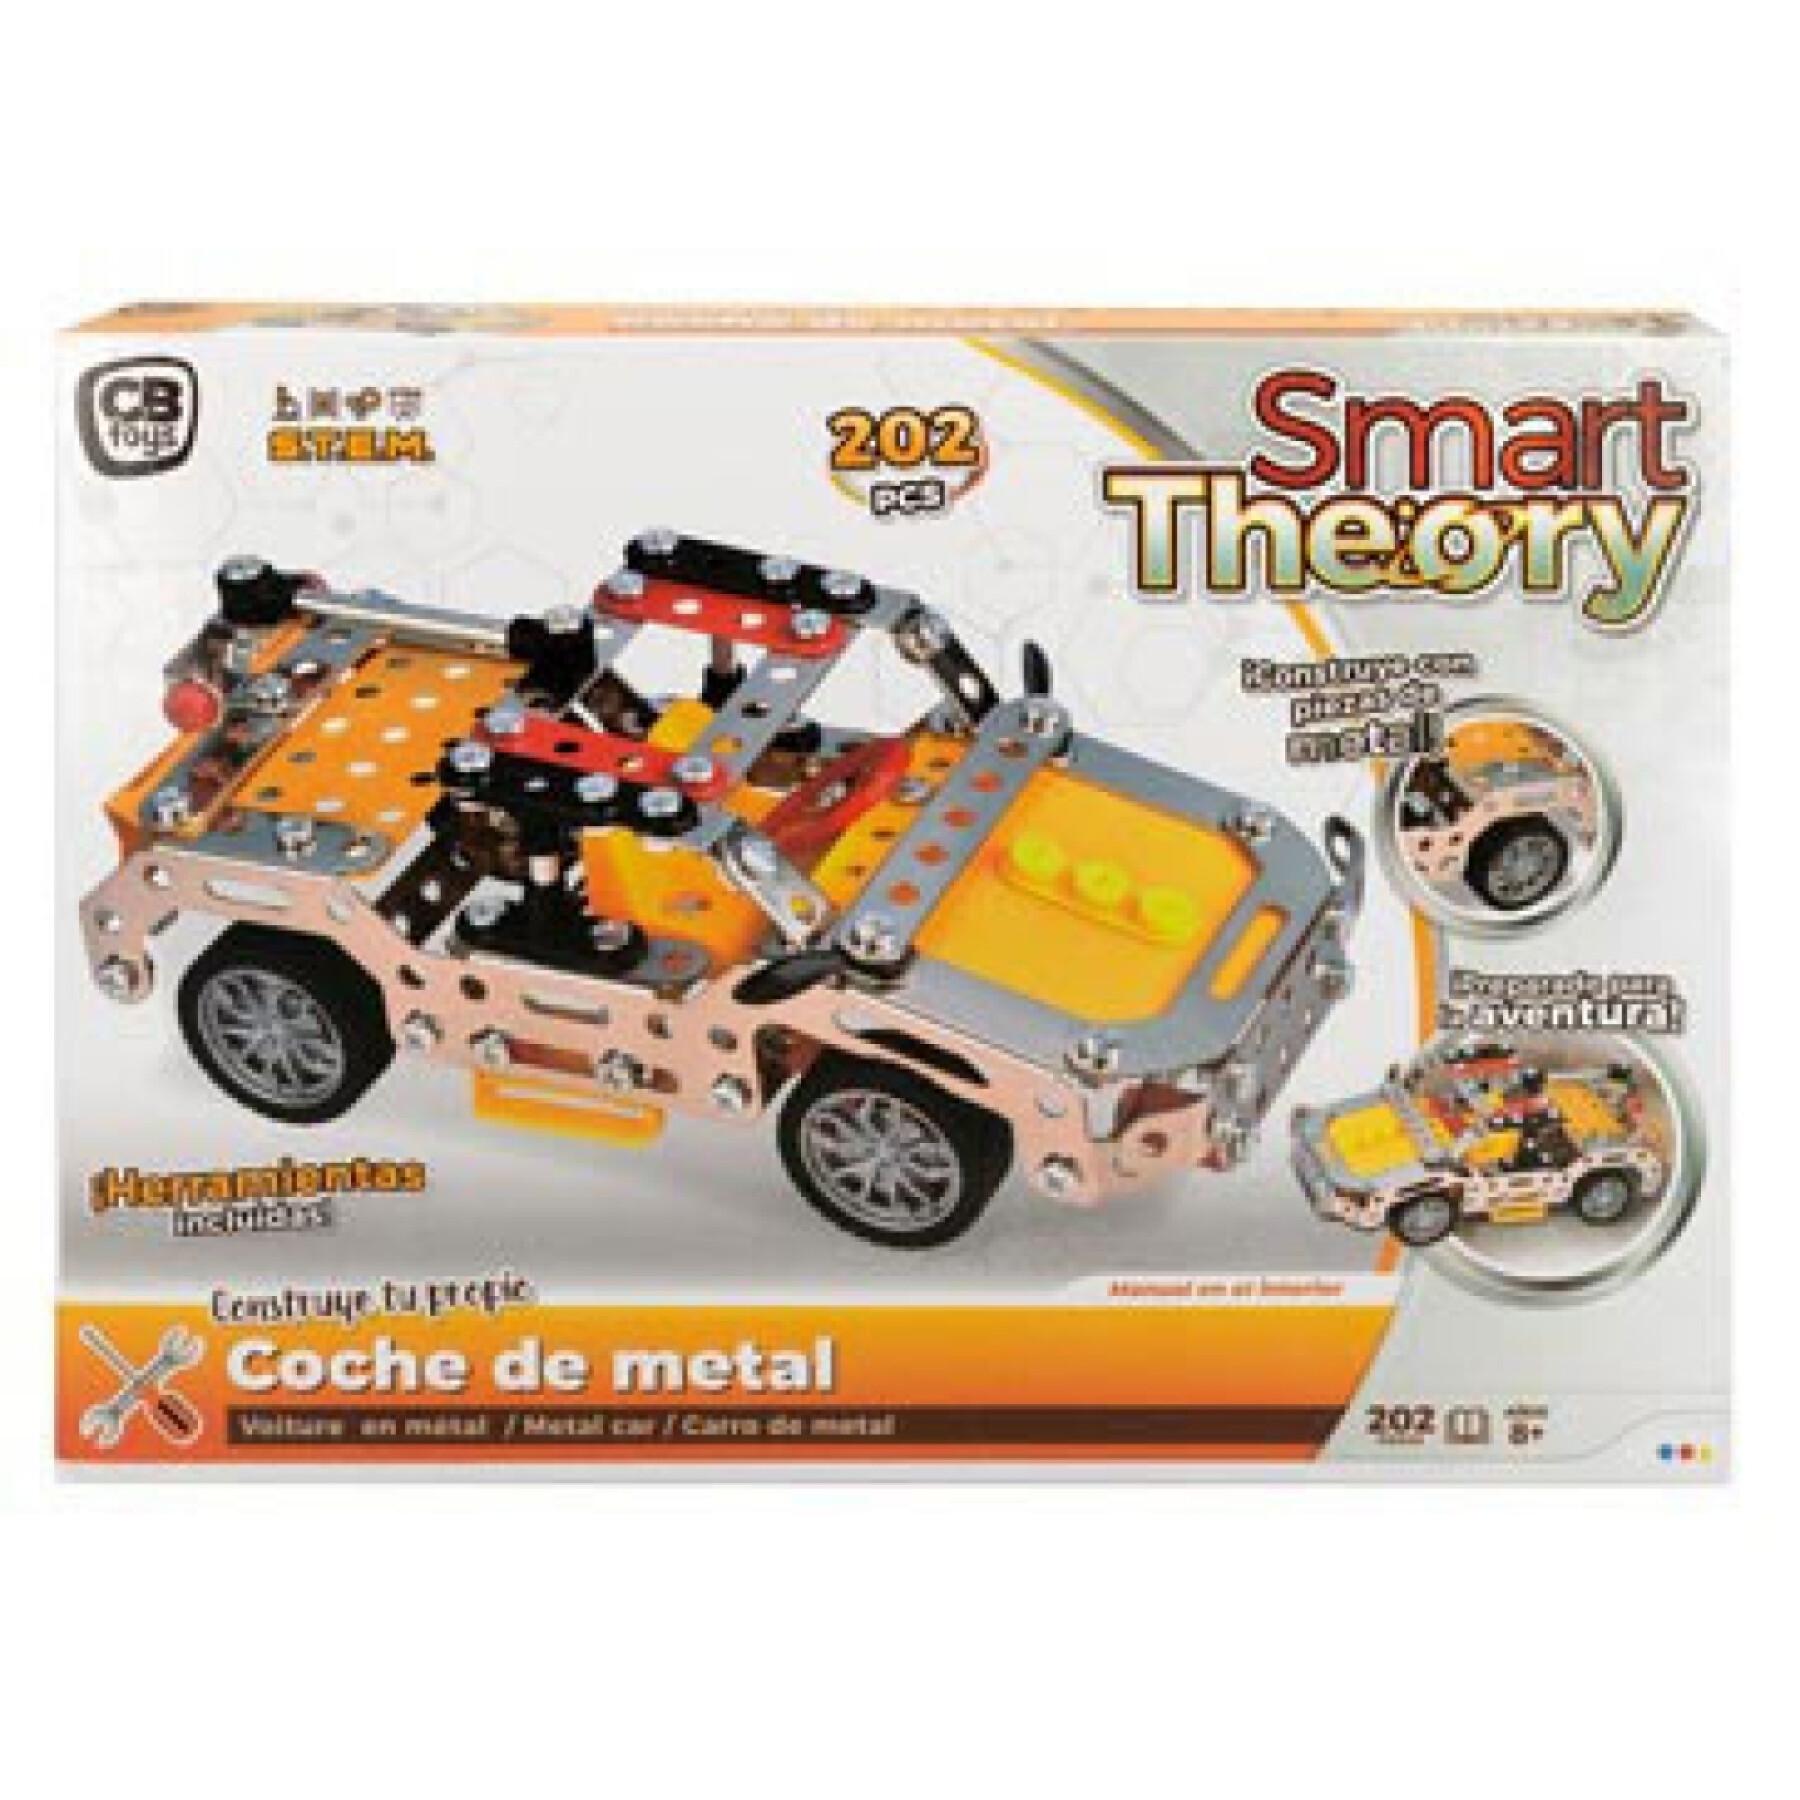 Metal mechanic building set CB Toys